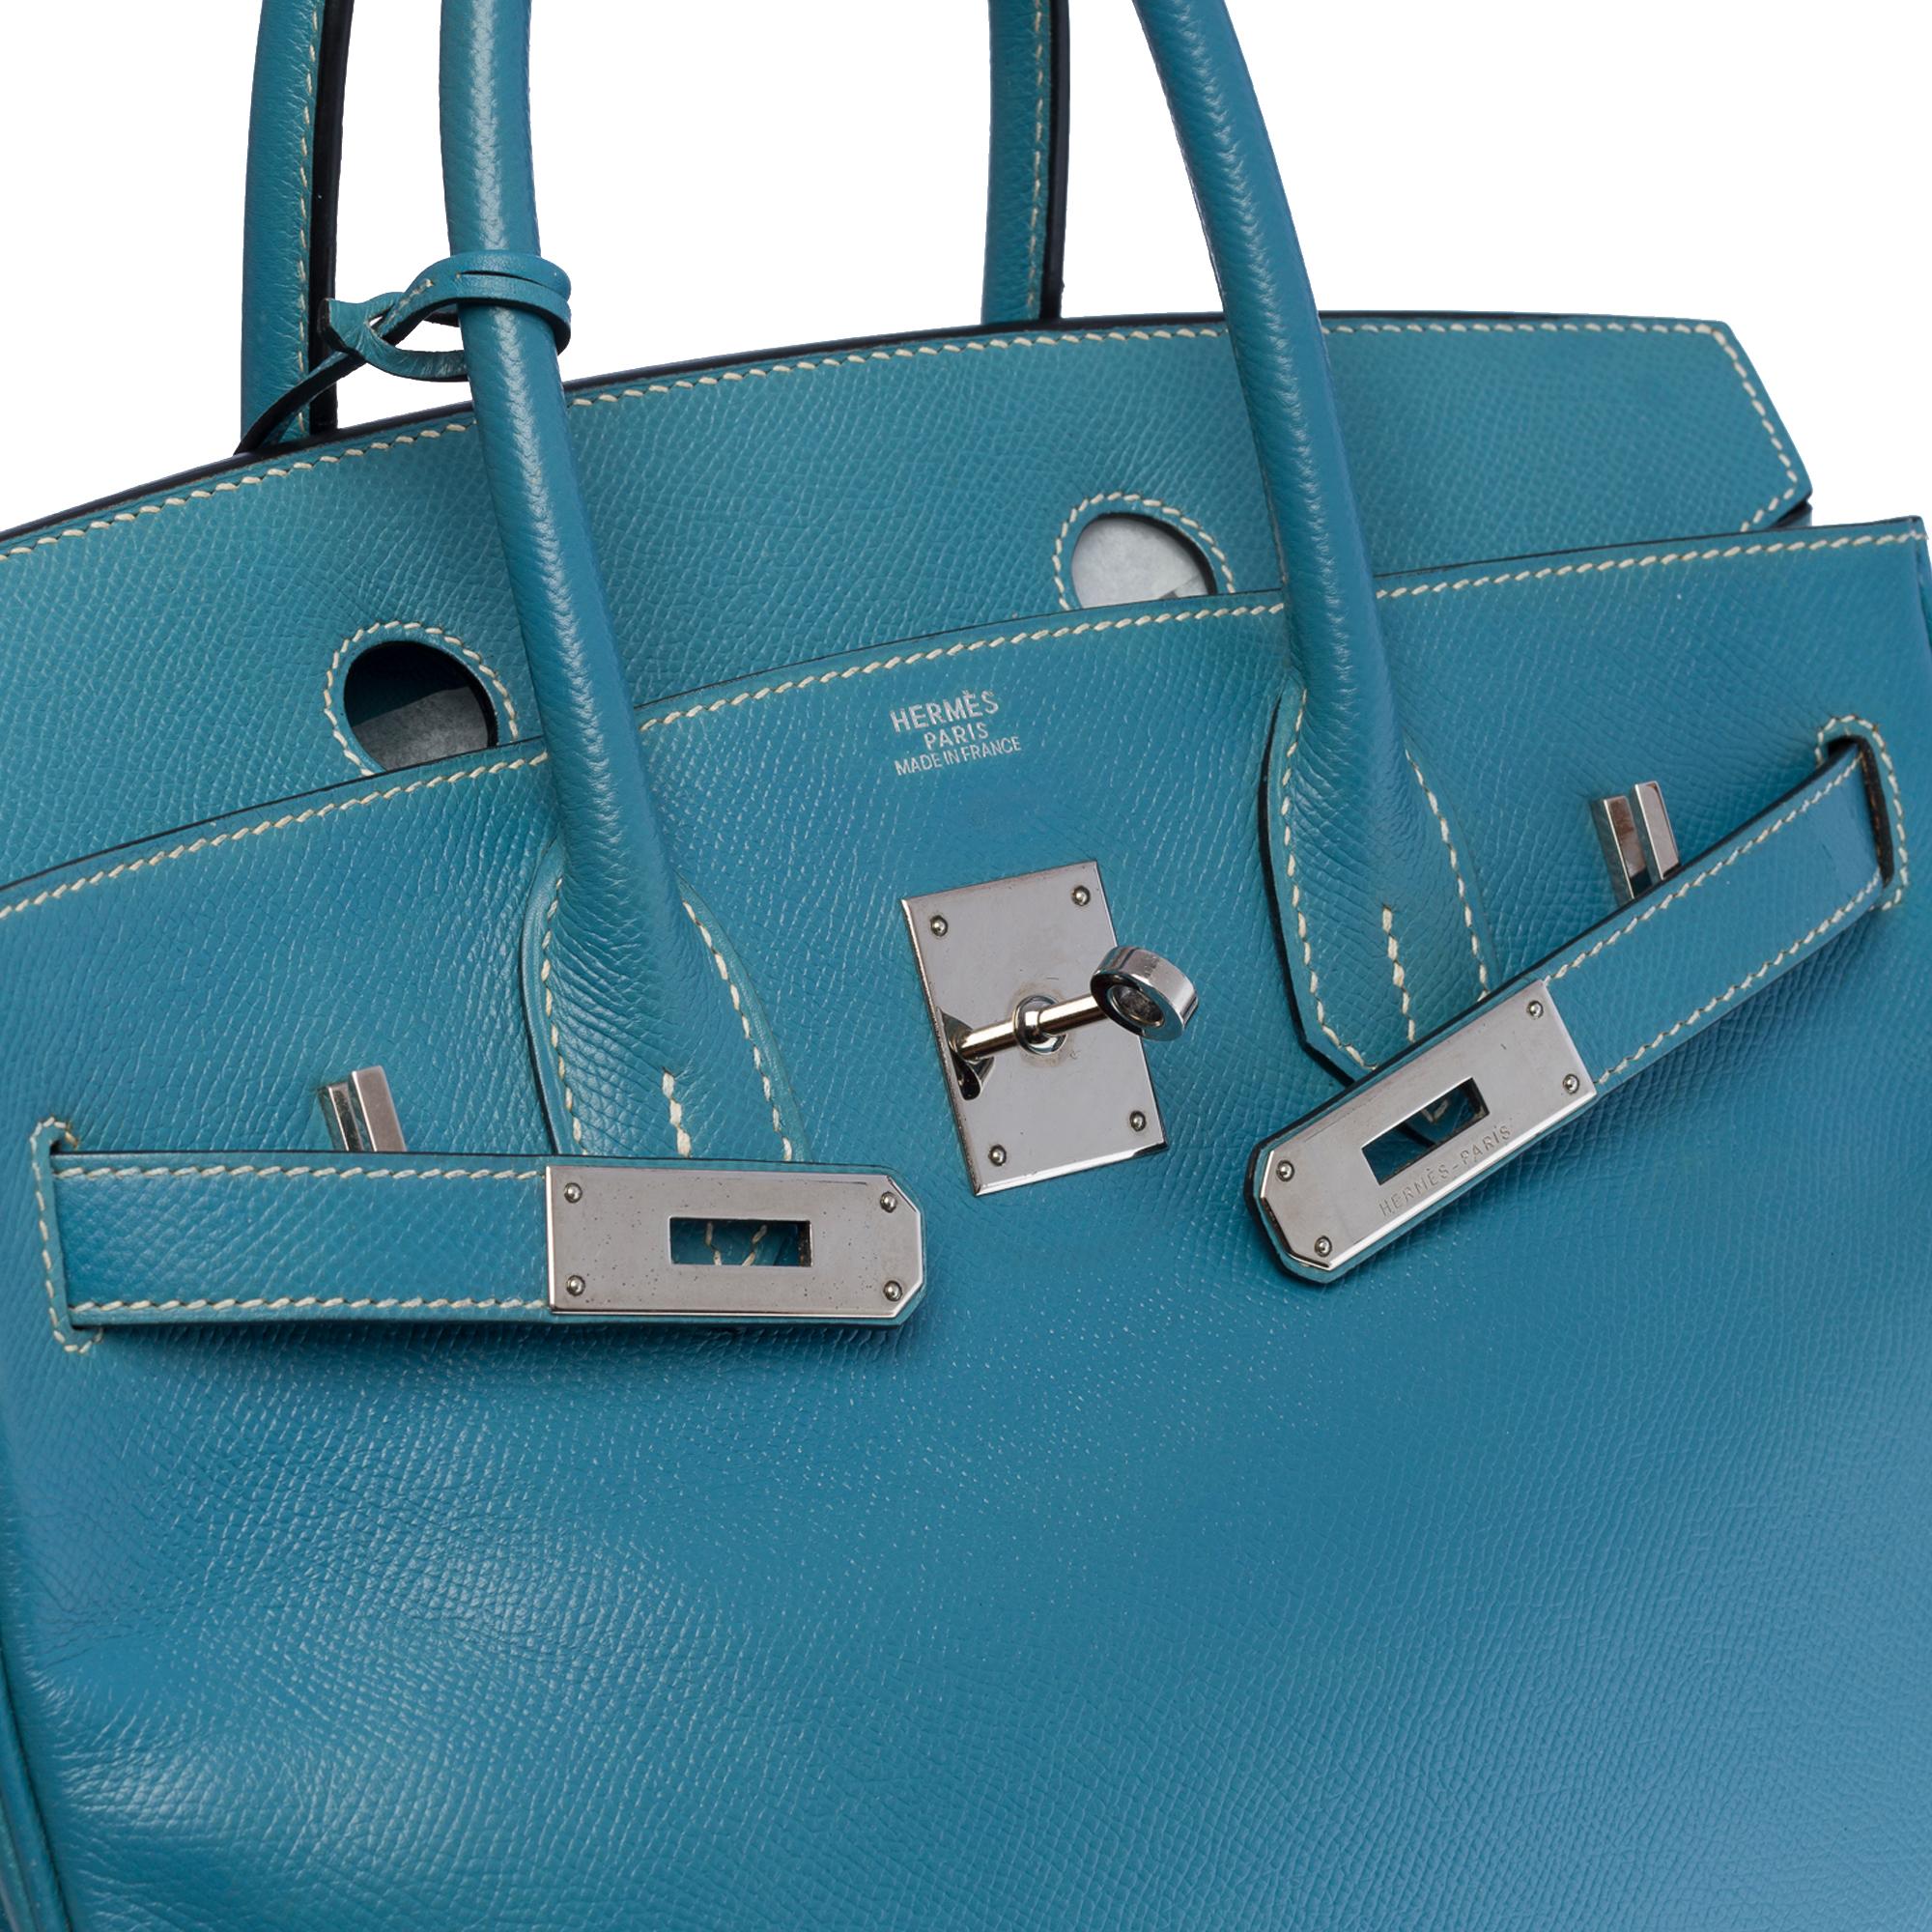 Stunning Hermès Birkin 30 handbag in Blue Jeans Epsom leather, SHW For Sale 1